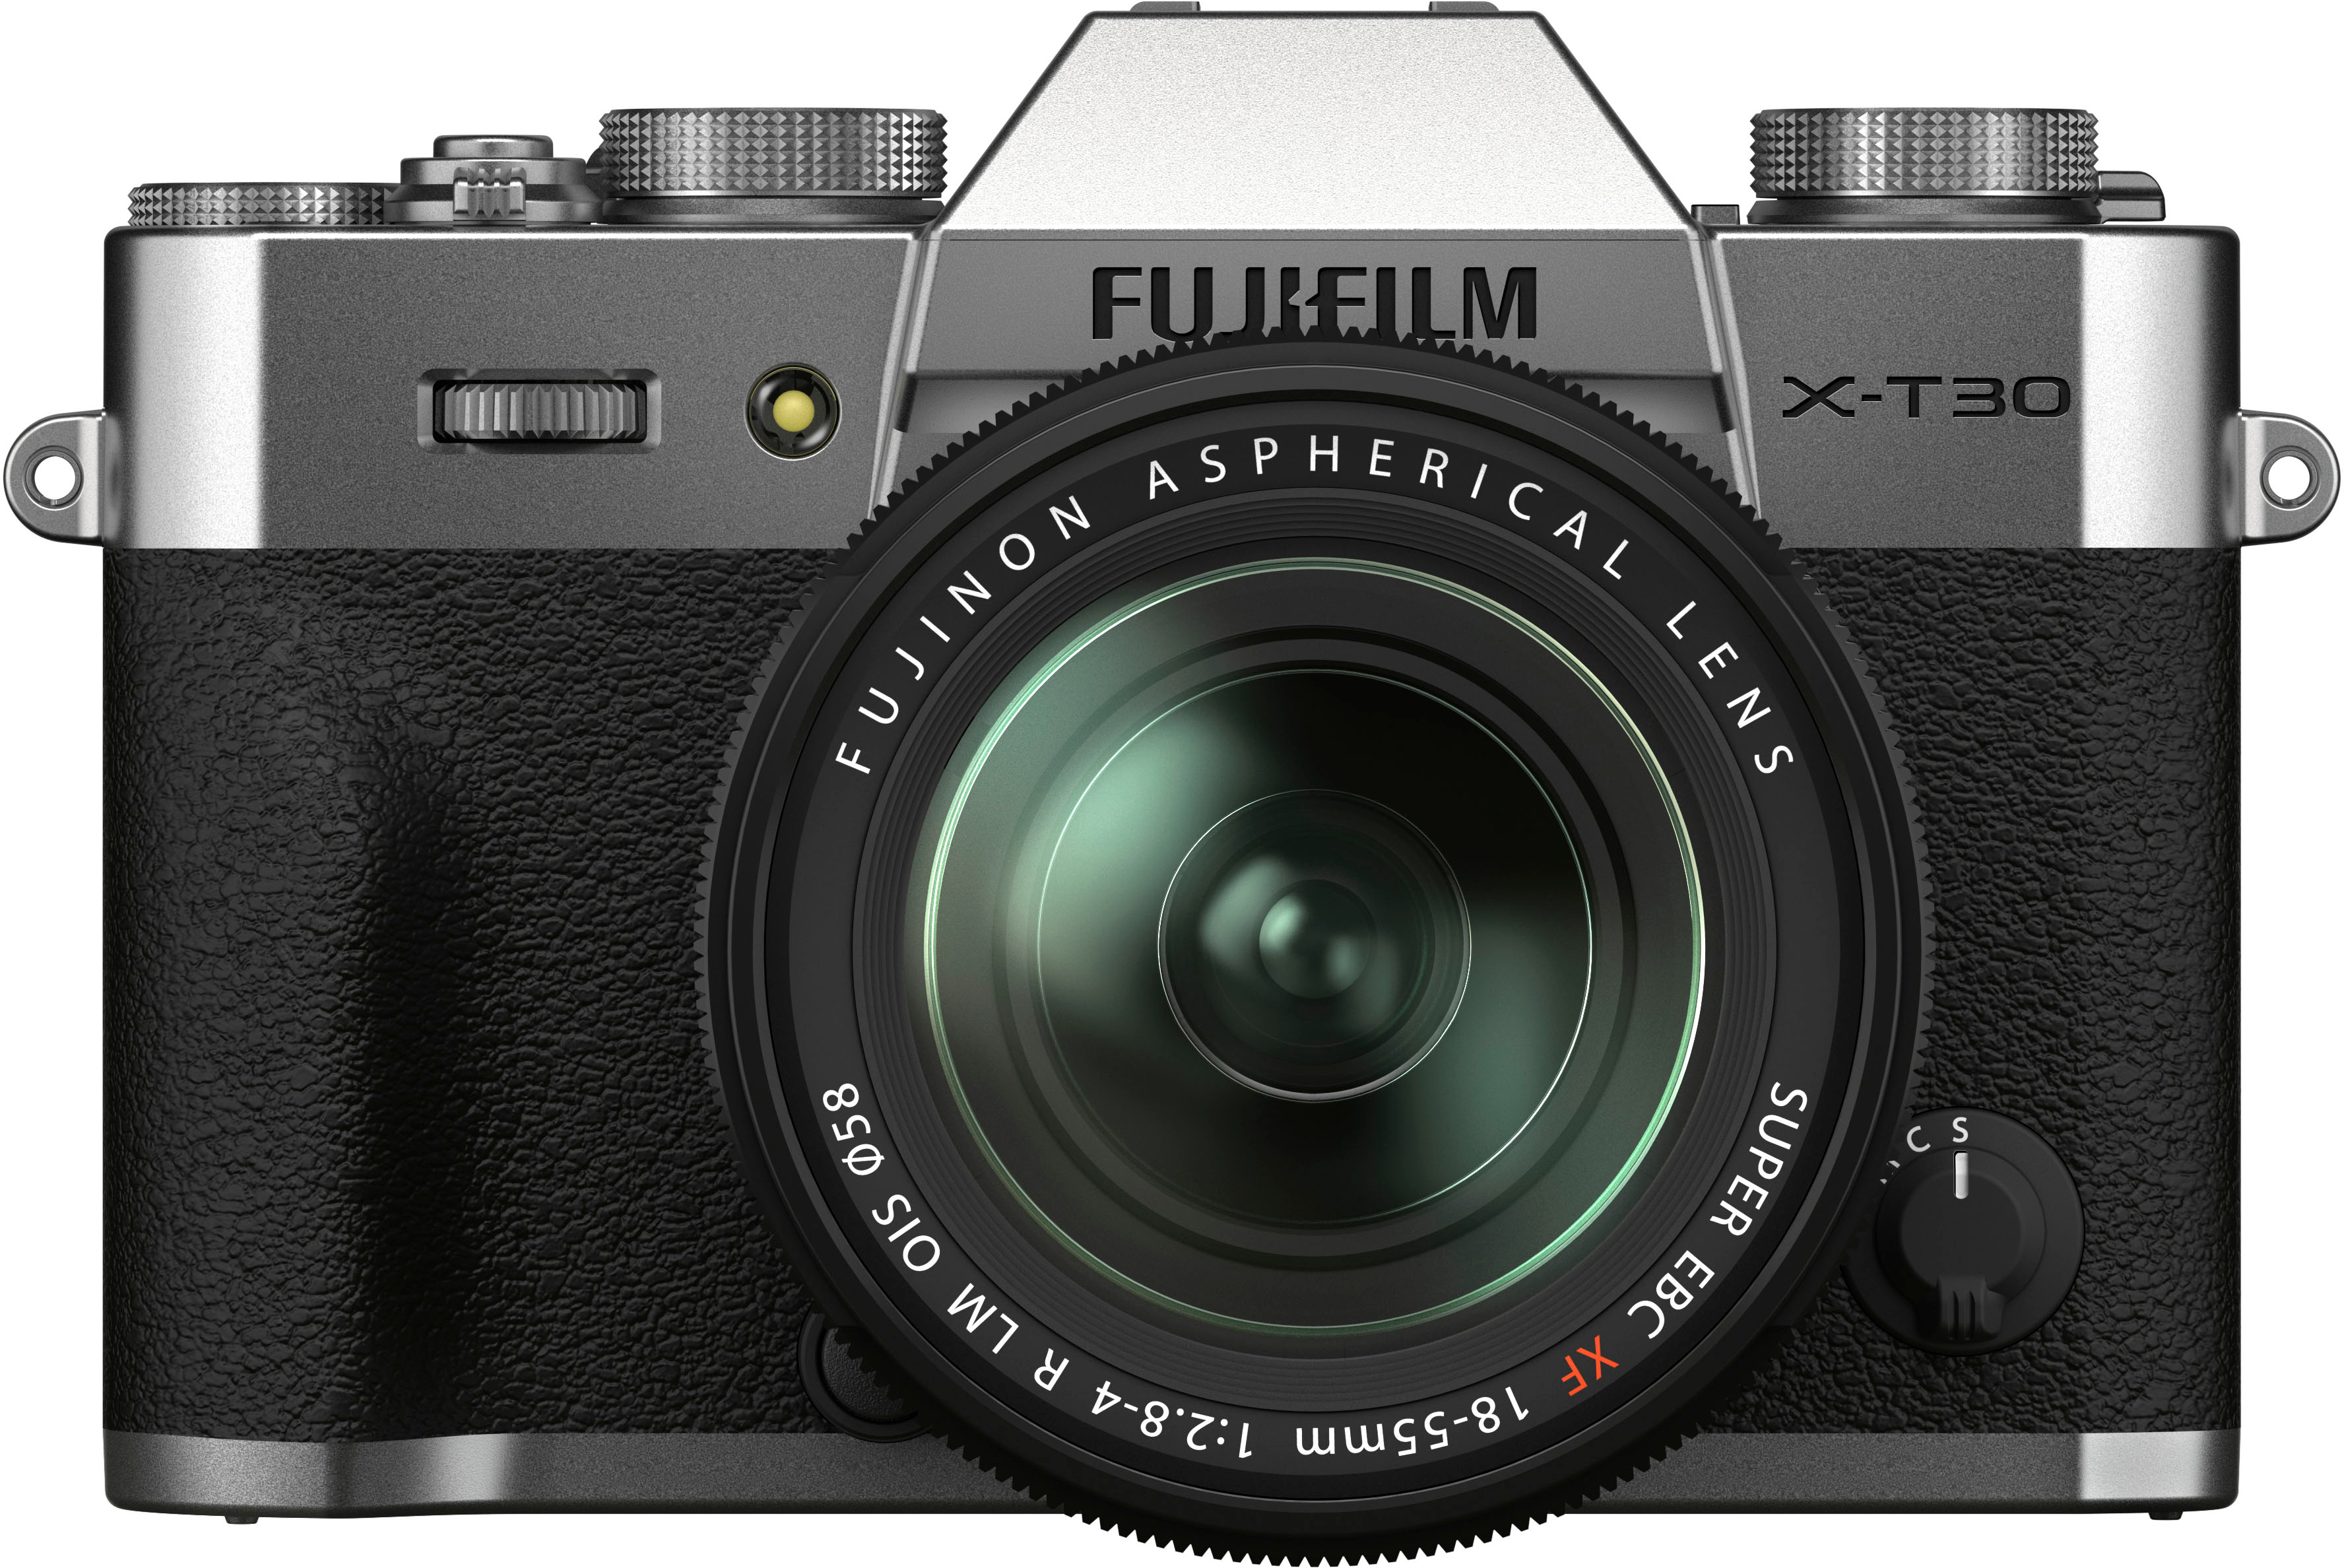 Overgave retort Eed Fujifilm X-T30 II Mirrorless Camera with XF18-55mm Lens Kit Silver 16759706  - Best Buy